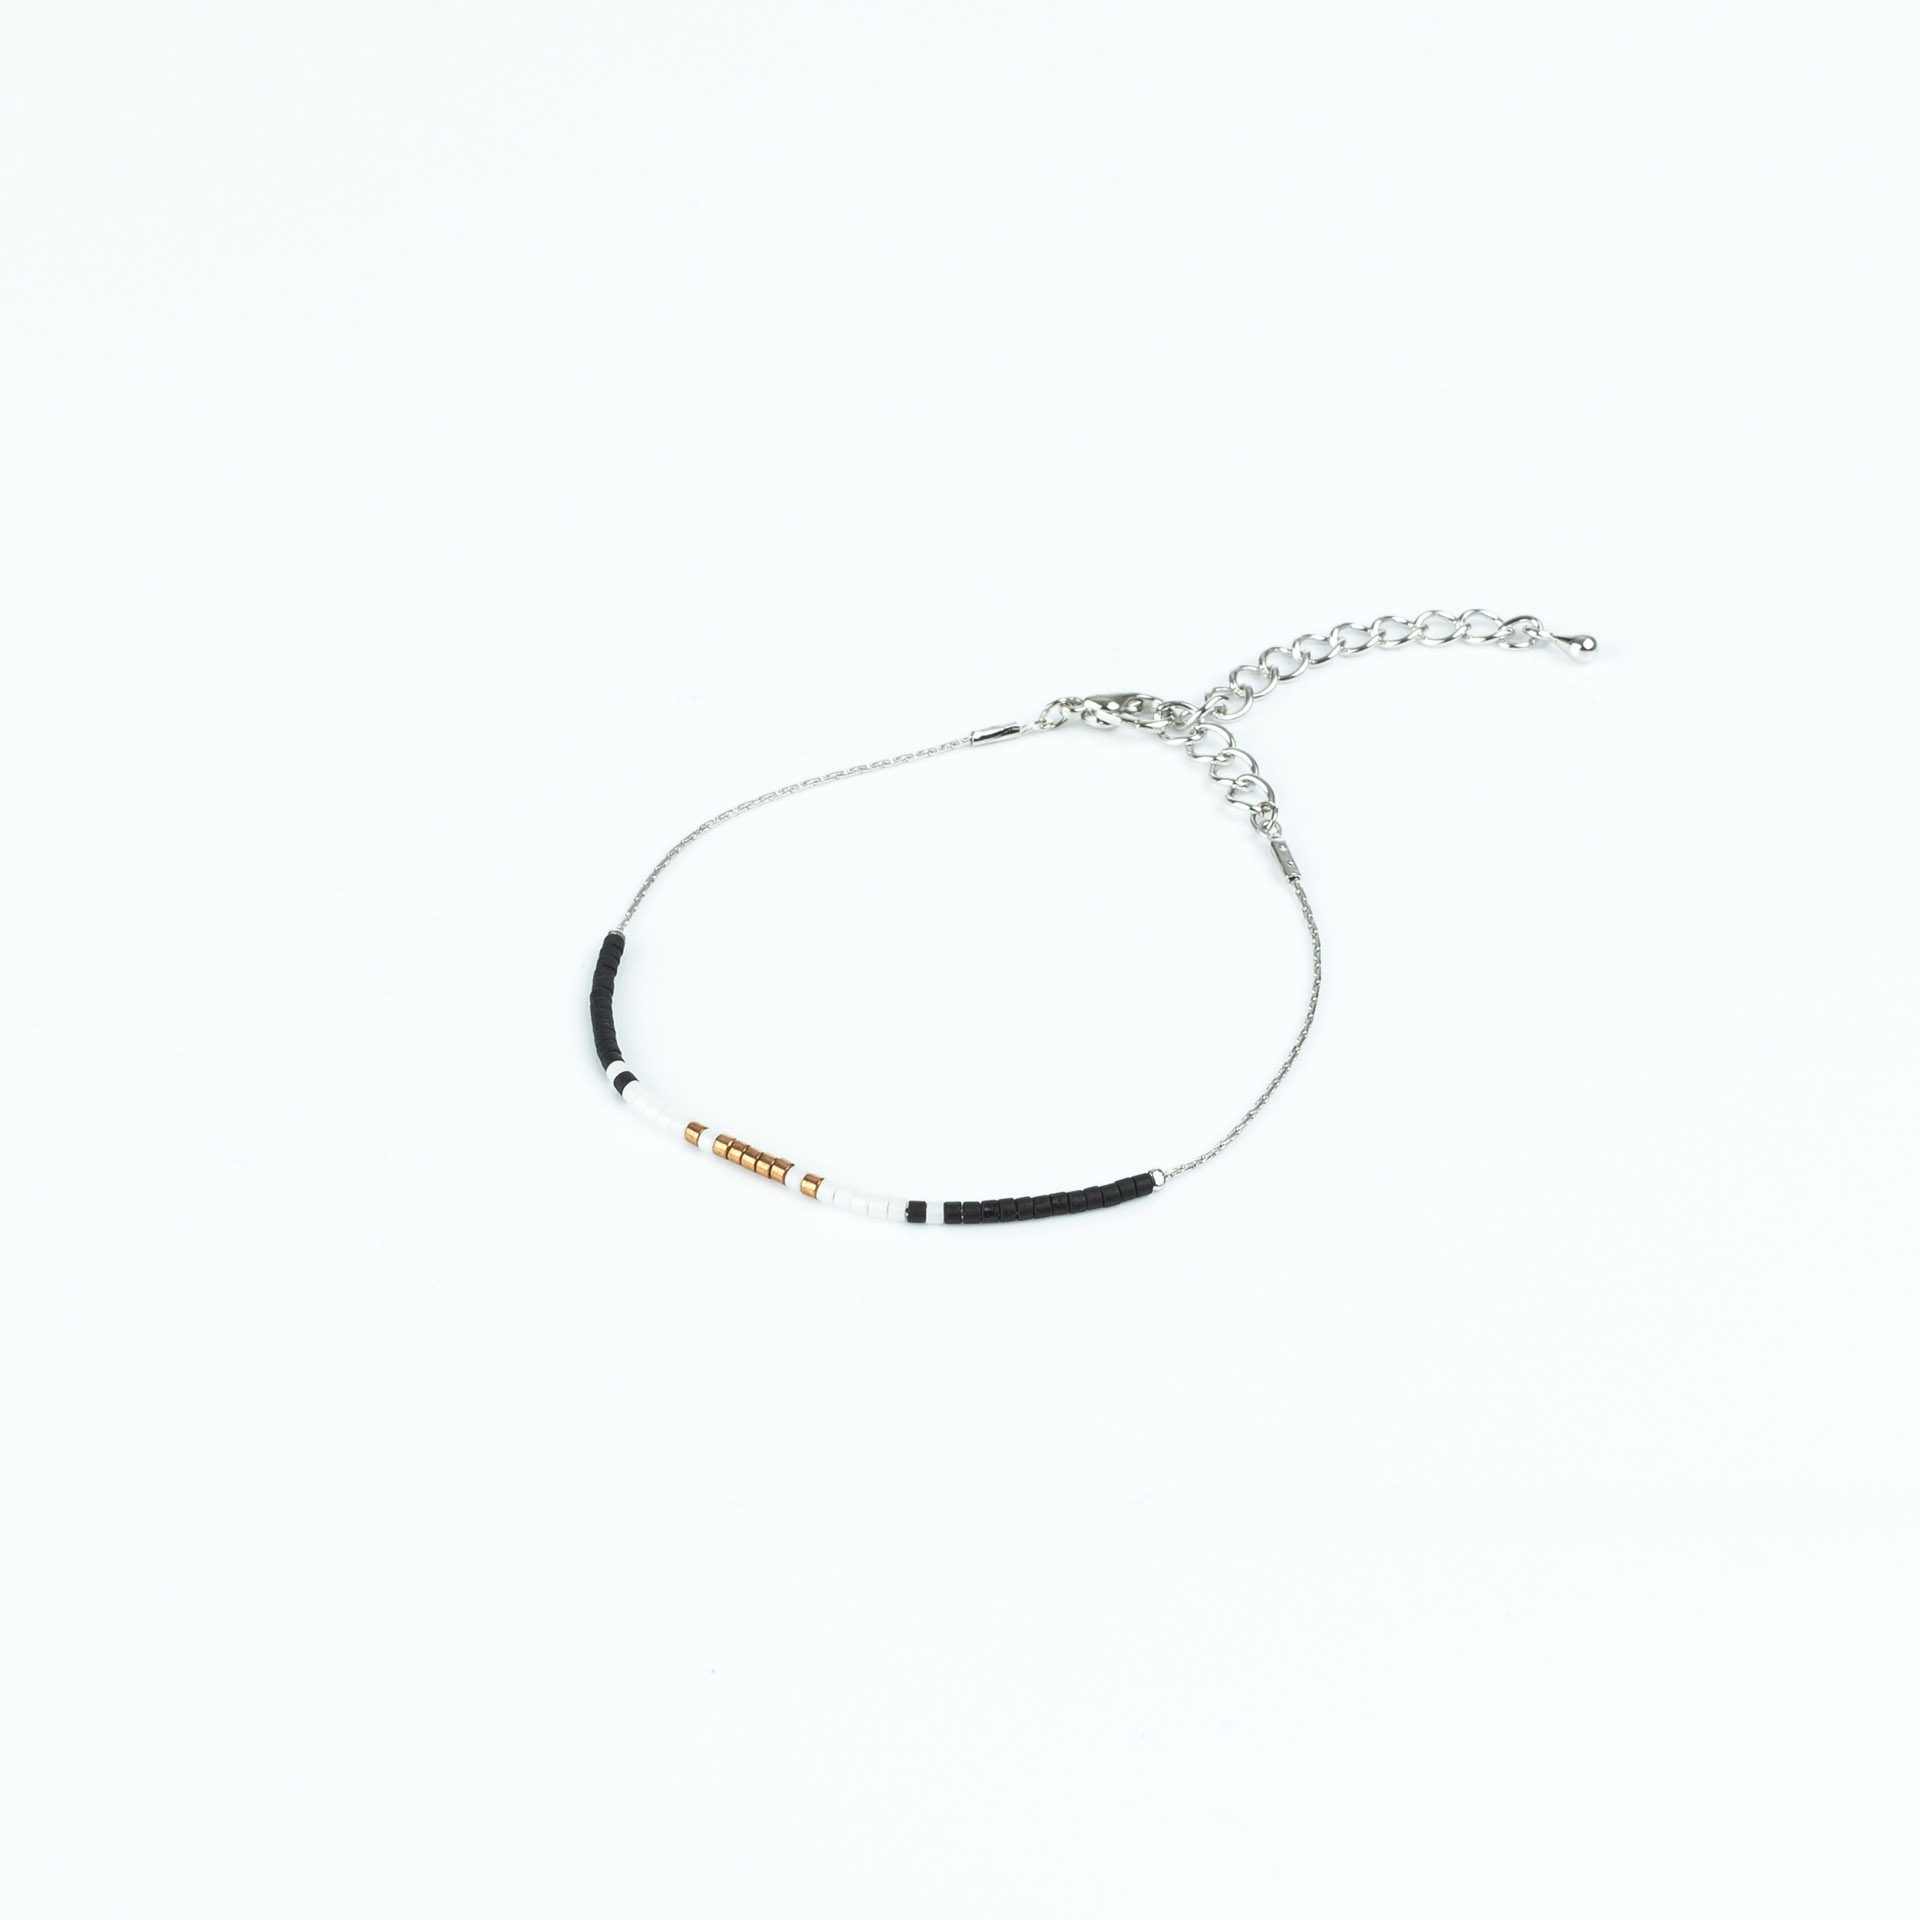 "Petite Beads" Armband mit japan. Rocaillesperlen, schwarz-weiß, silberfarben